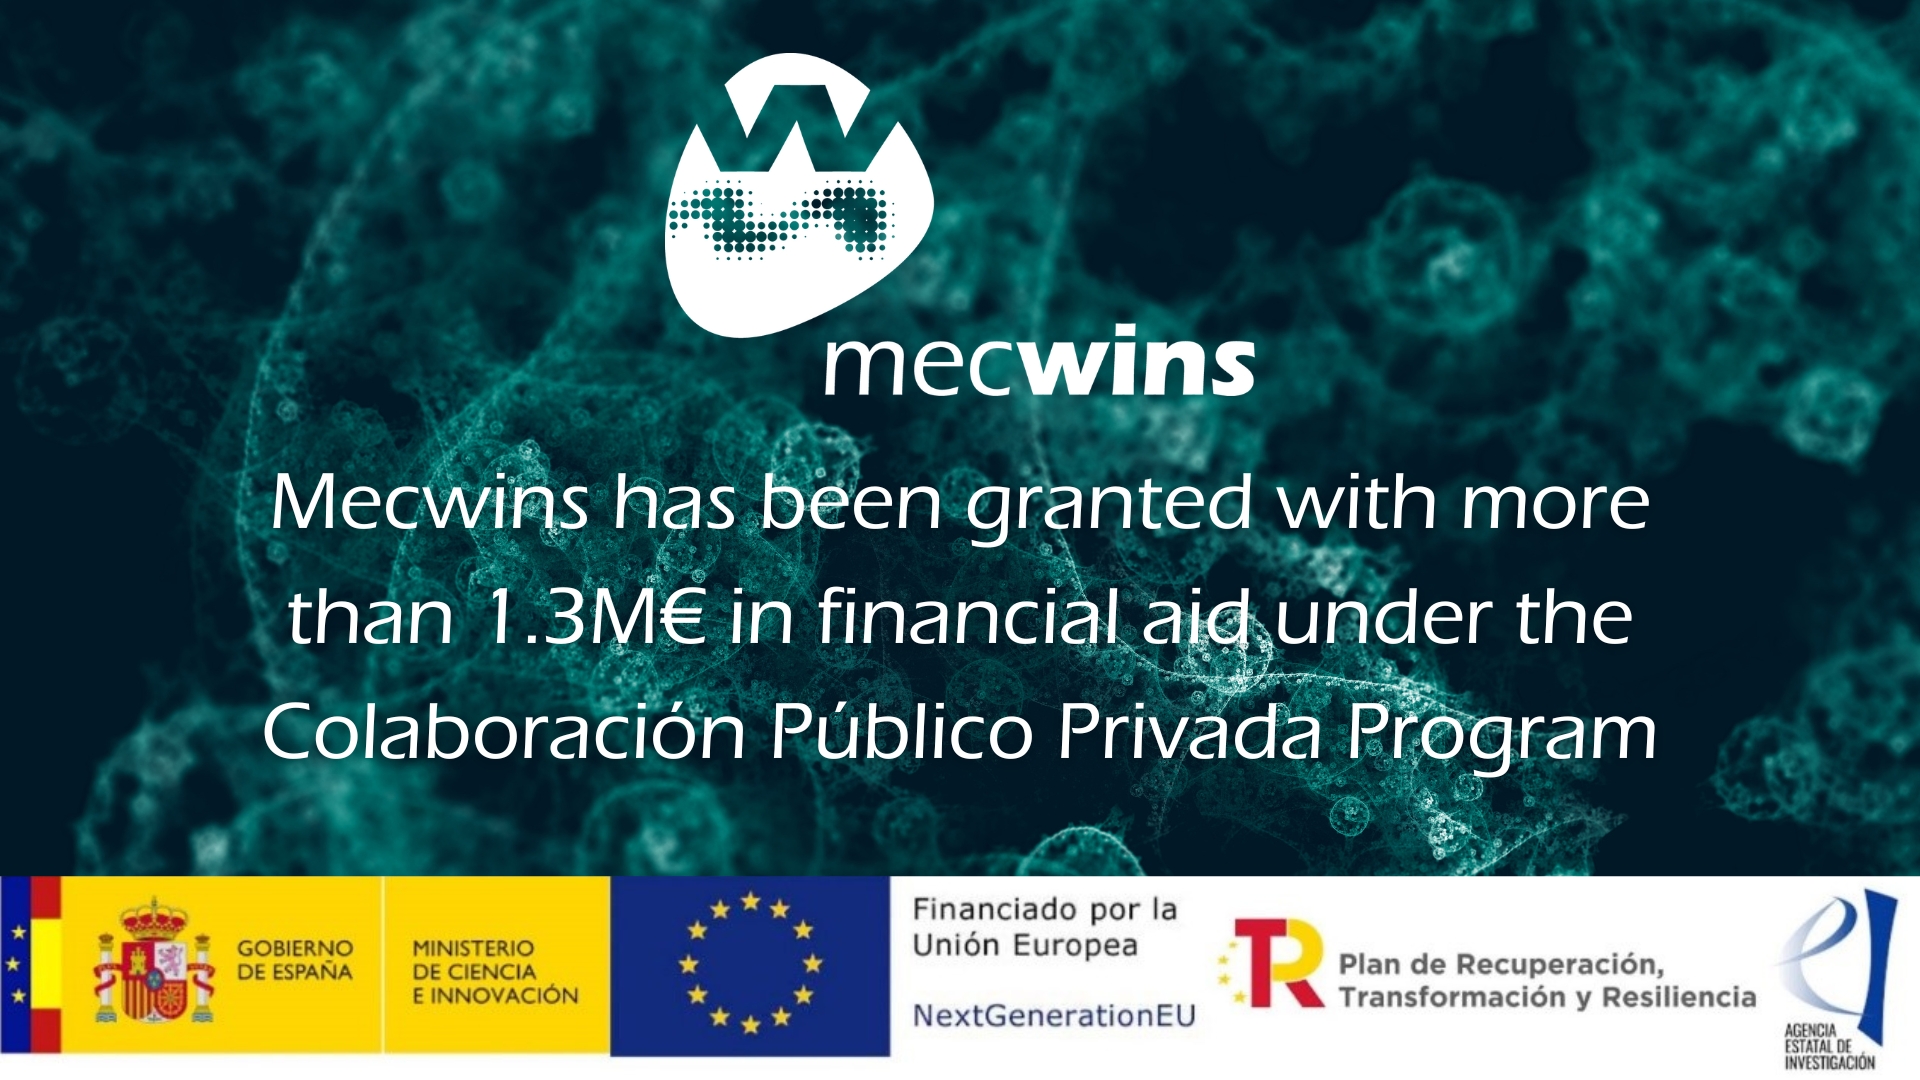 Mecwins has been granted with more than 1.3M€ in financial aid under the Colaboración Público Privada Program